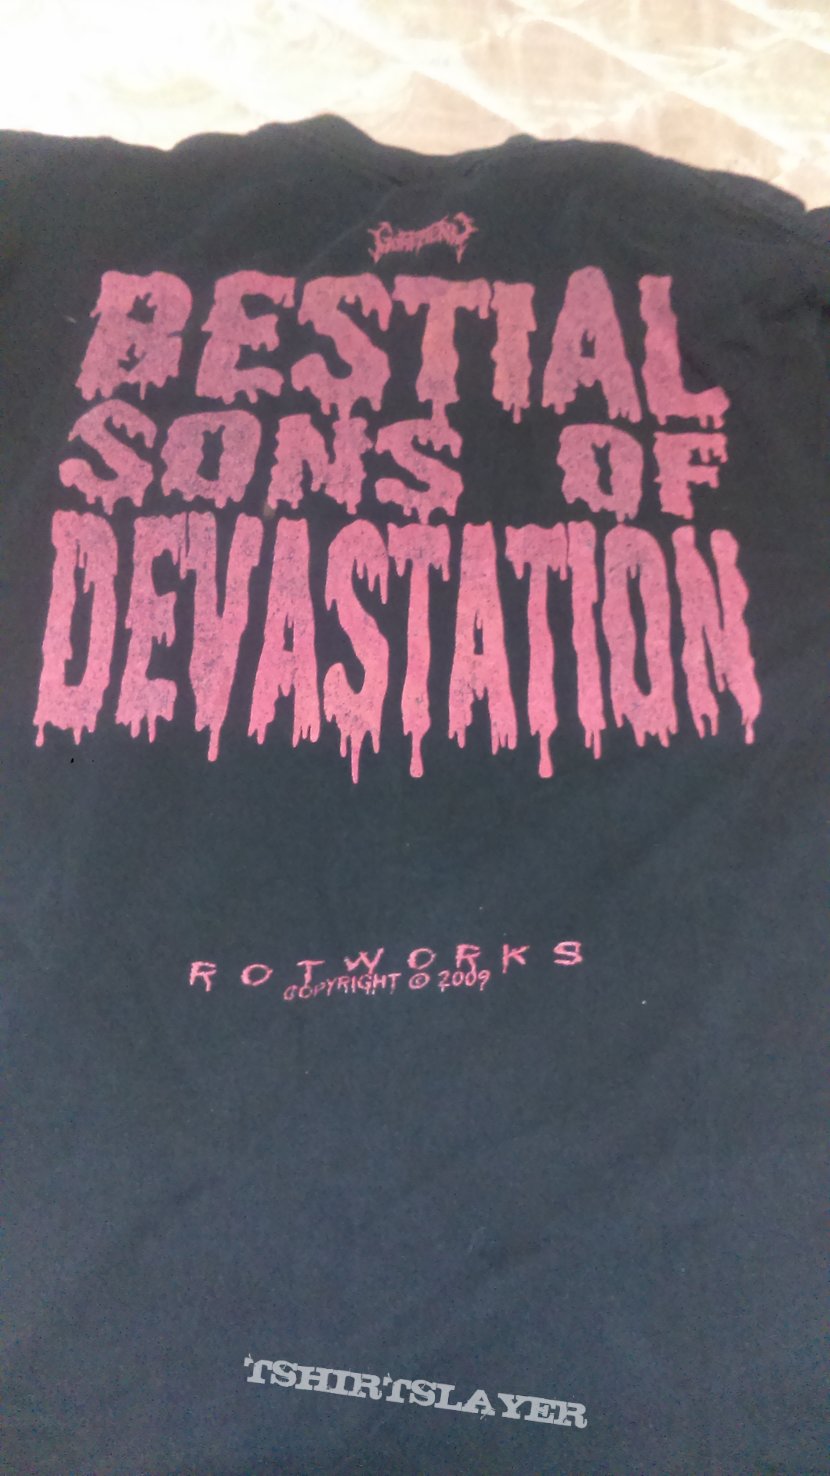 Regurgitate - Bestial Sons of Devastation